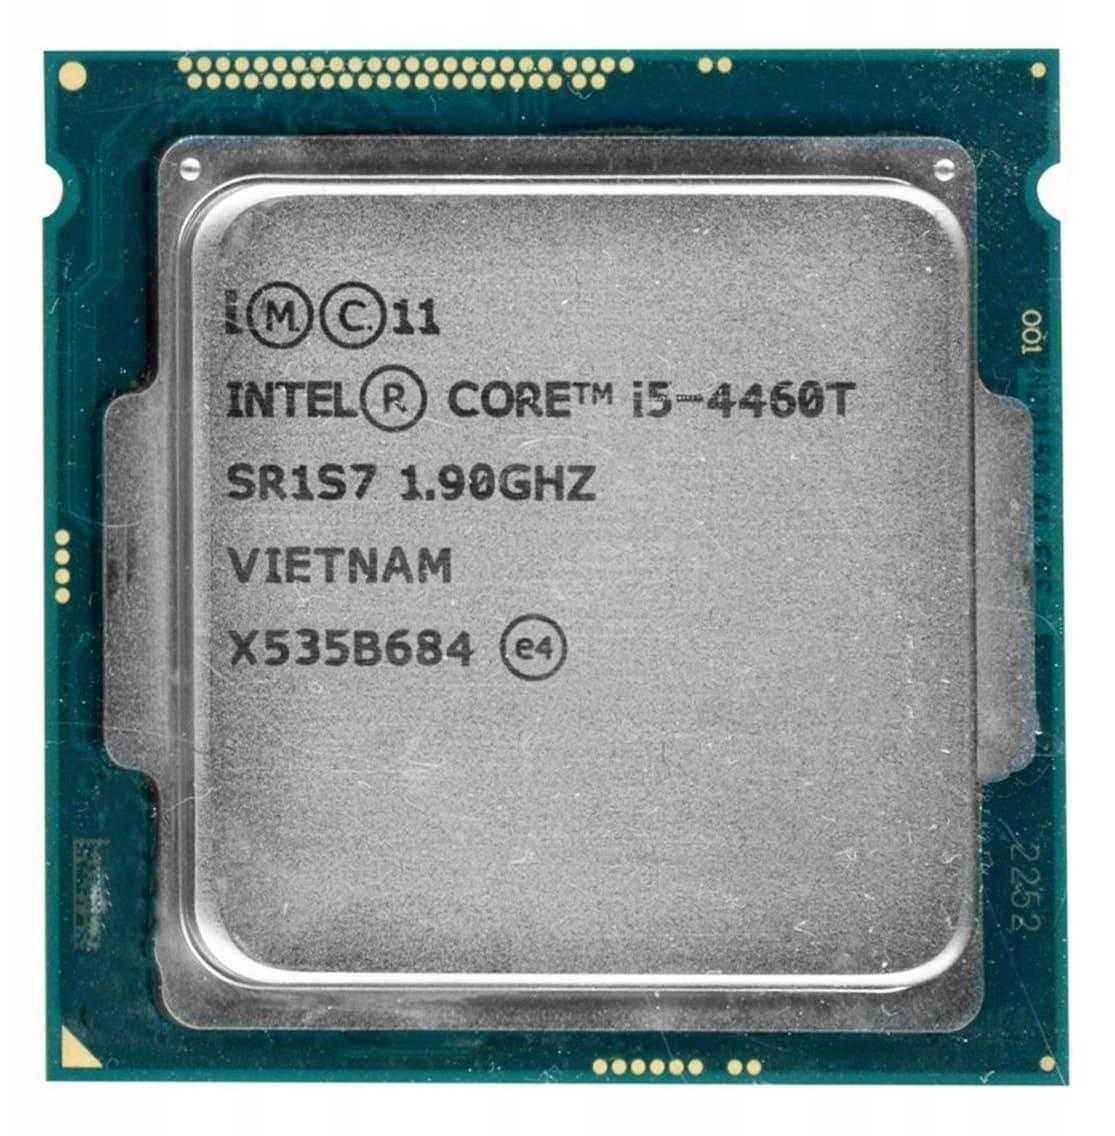 Распродажа Процессоров LGA1150 4Gen Intel Core I3\I5\I7 E3-v3